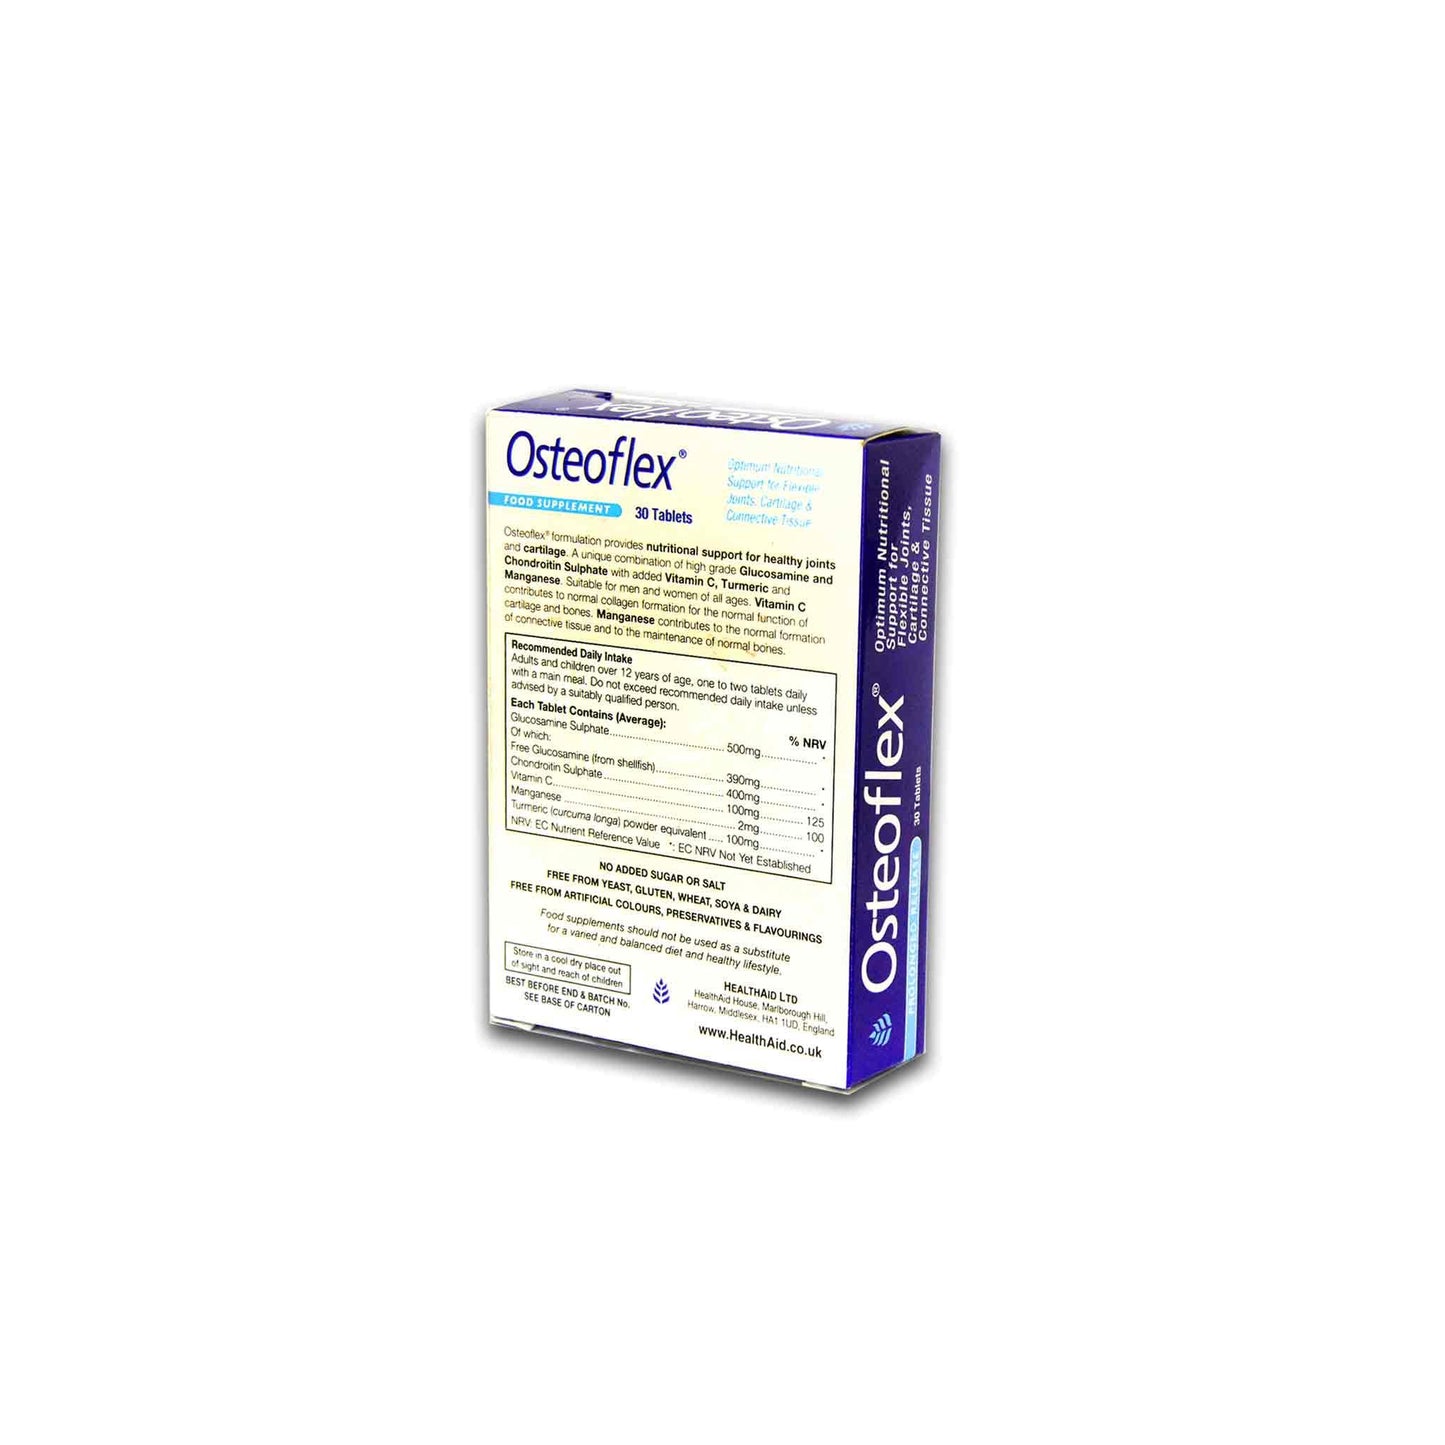 Health Aid Osteoflex 30 tablets